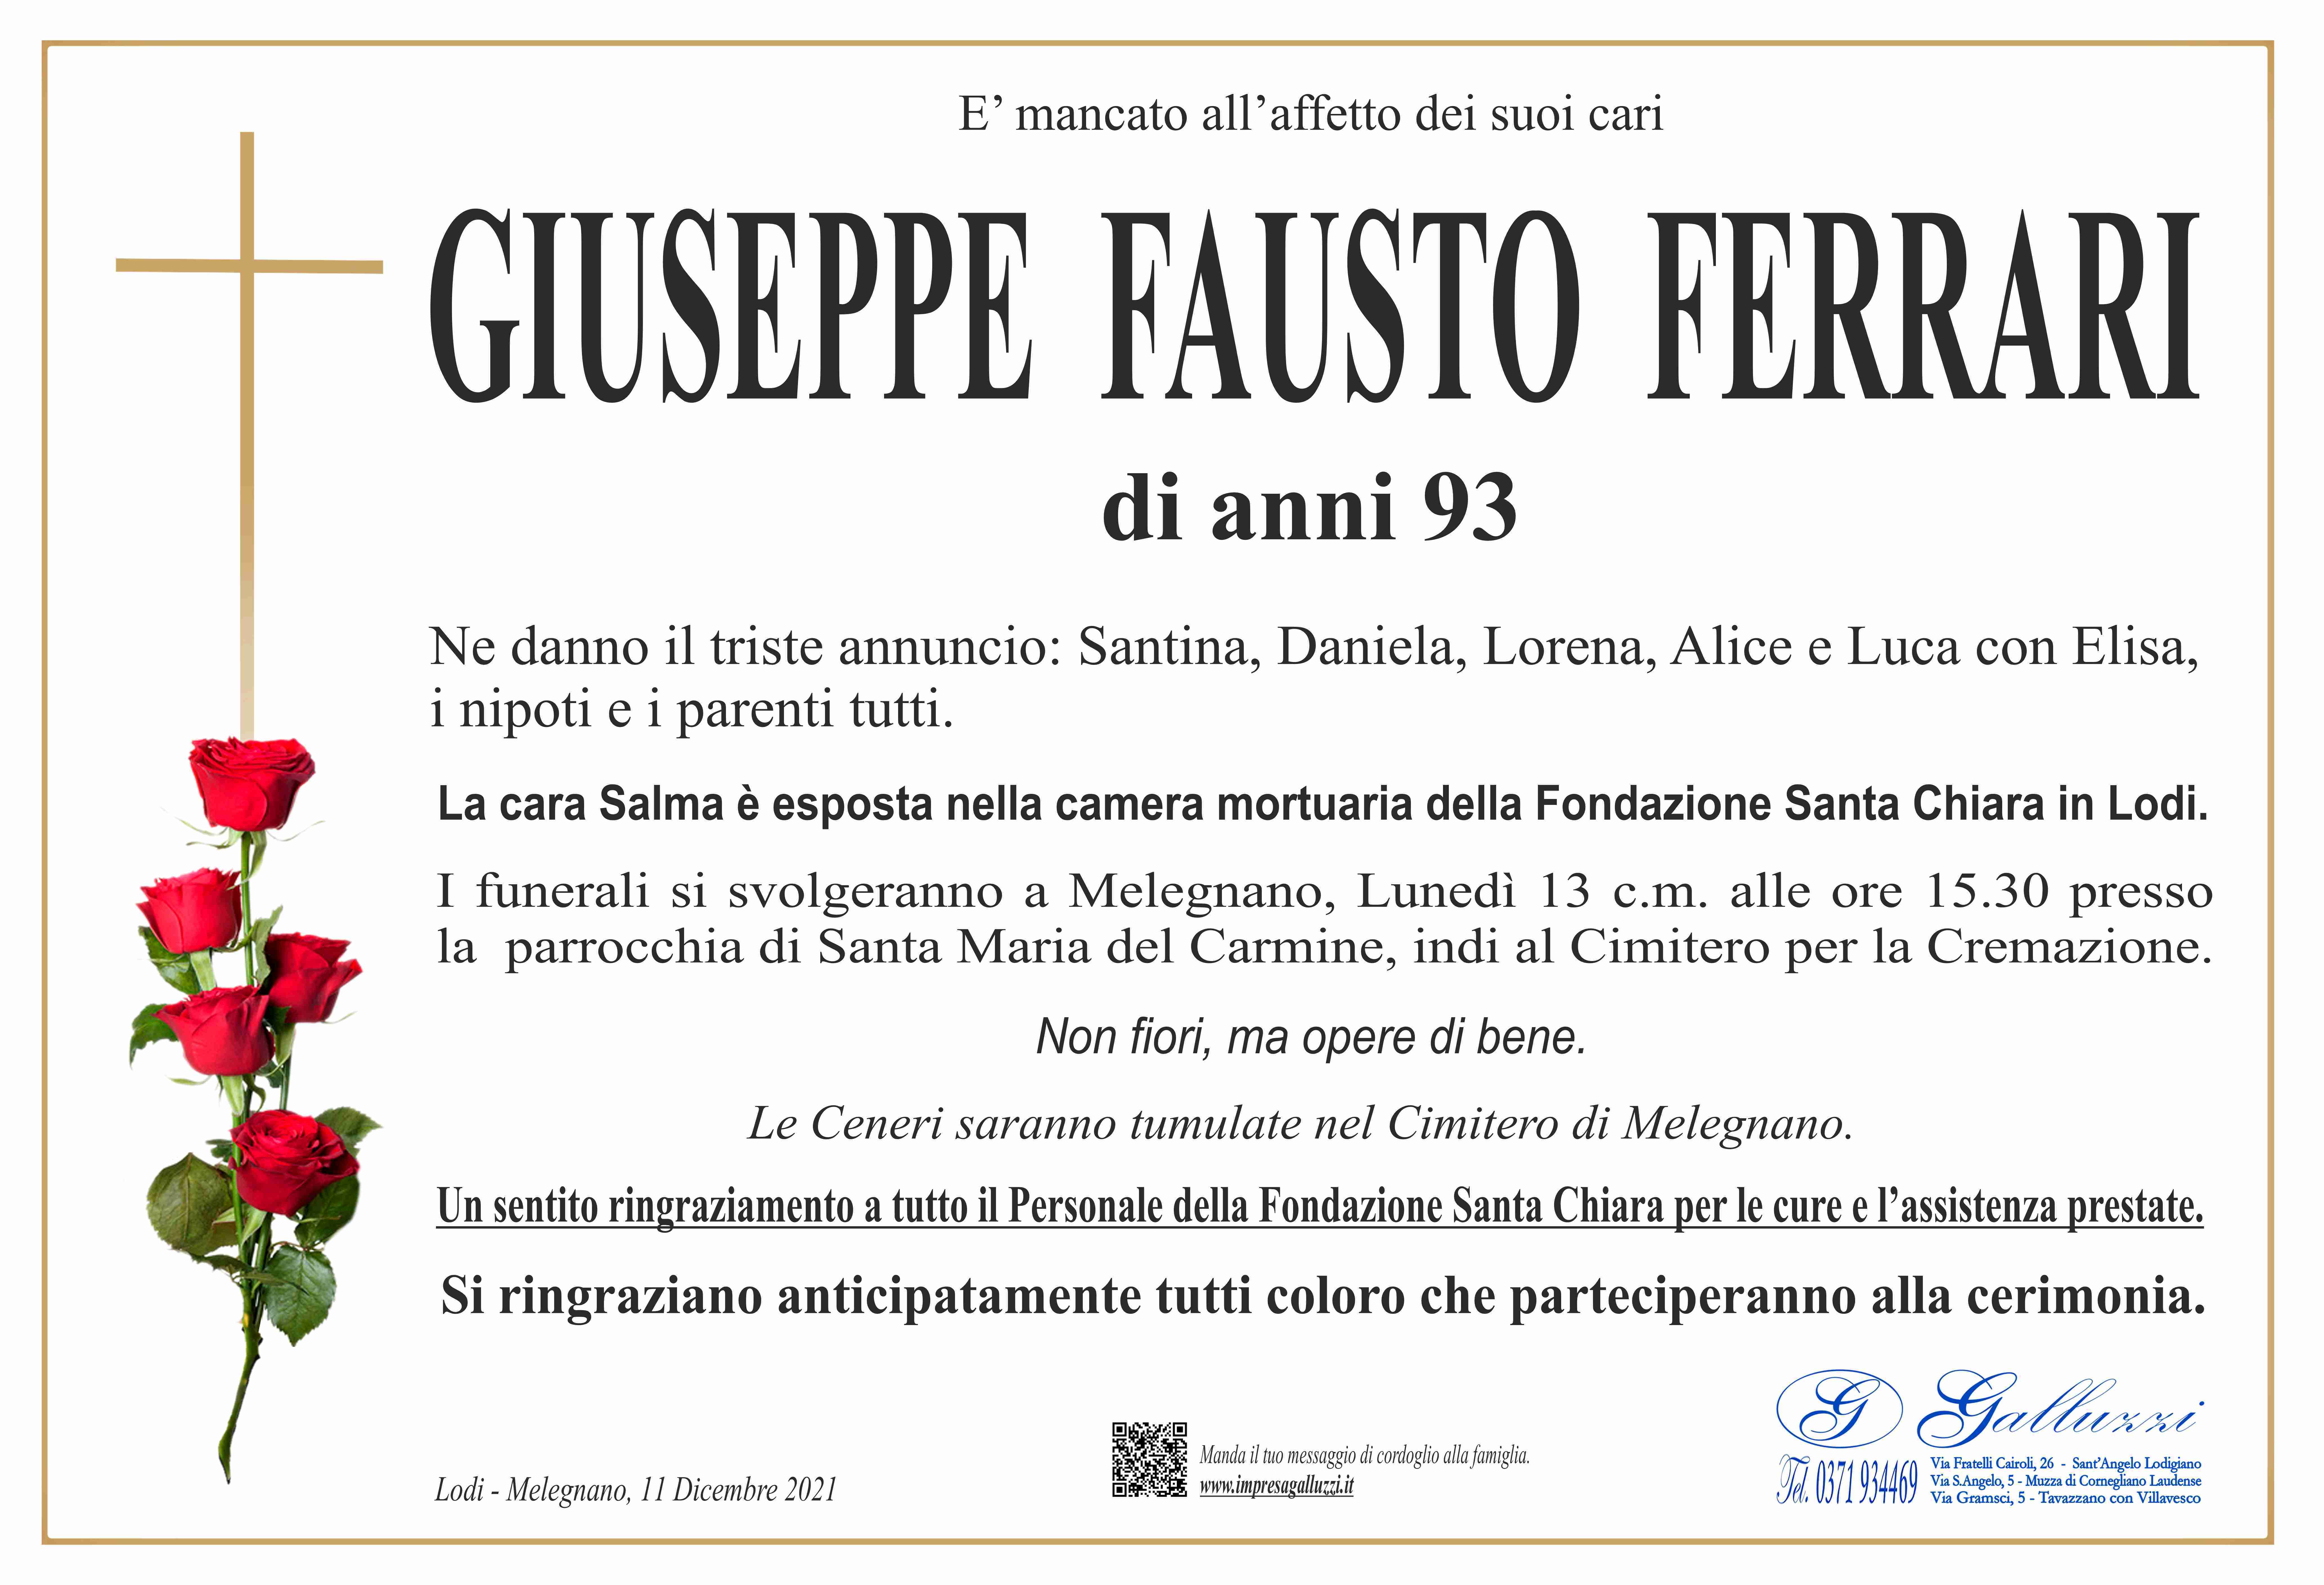 Giuseppe Fausto Ferrari